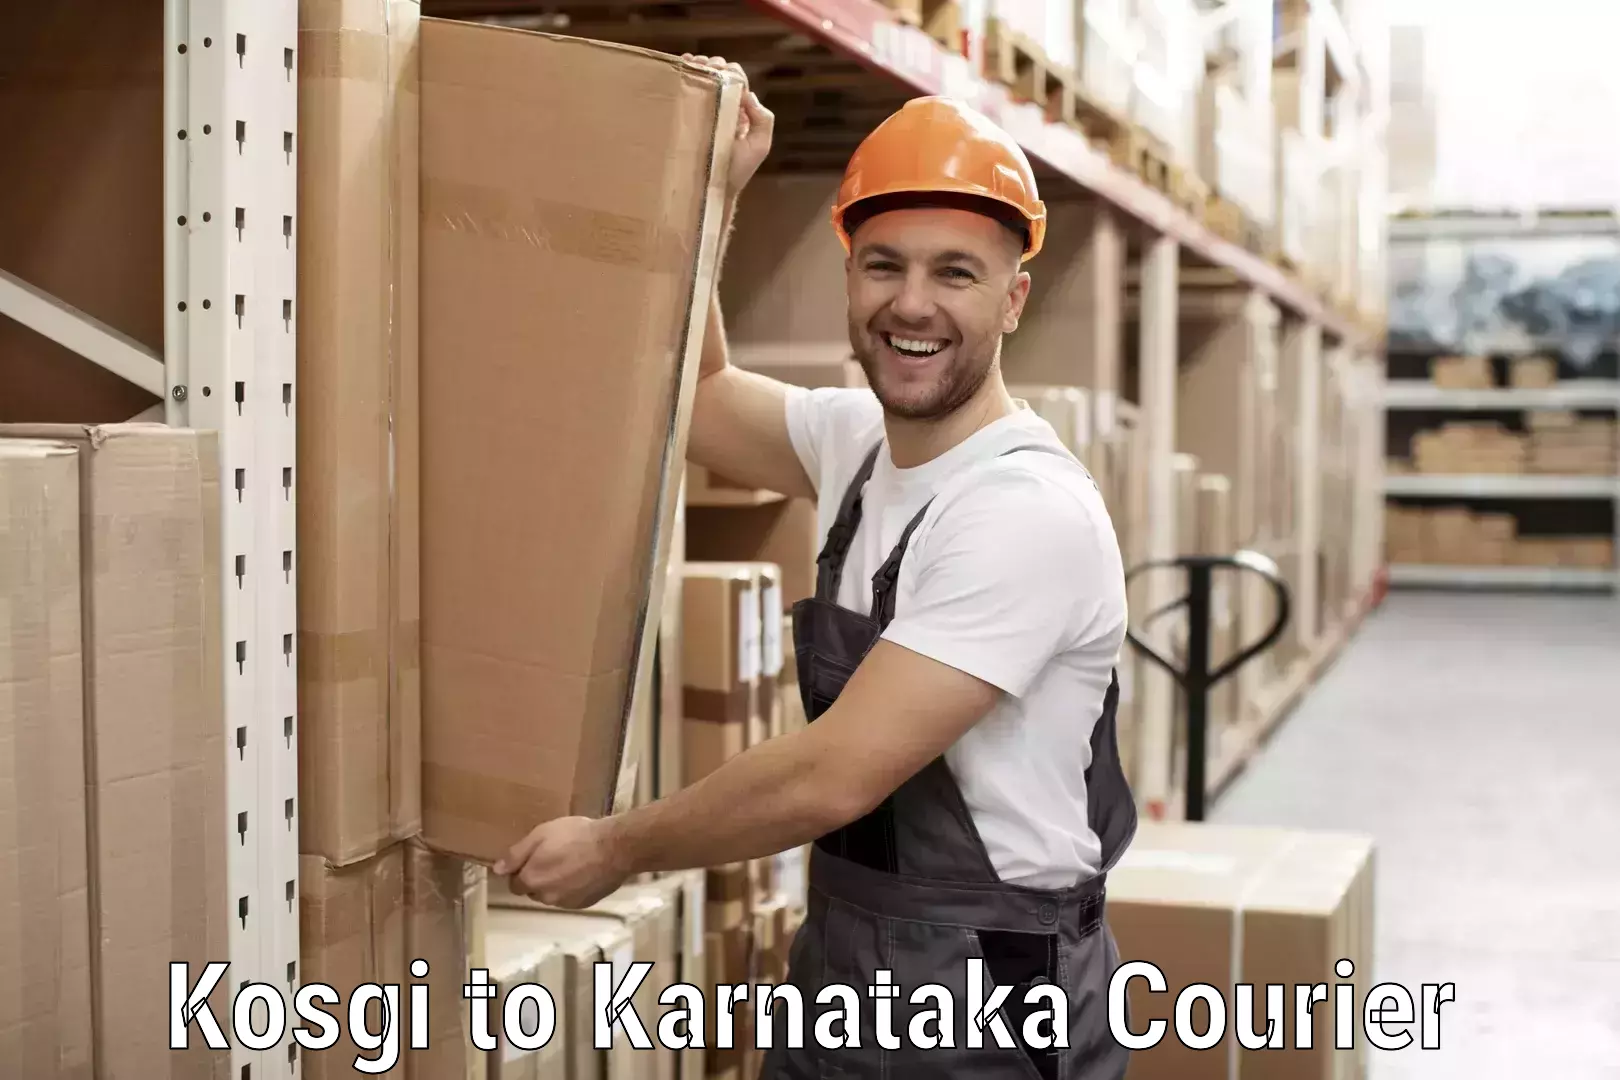 Courier service innovation Kosgi to Bangalore